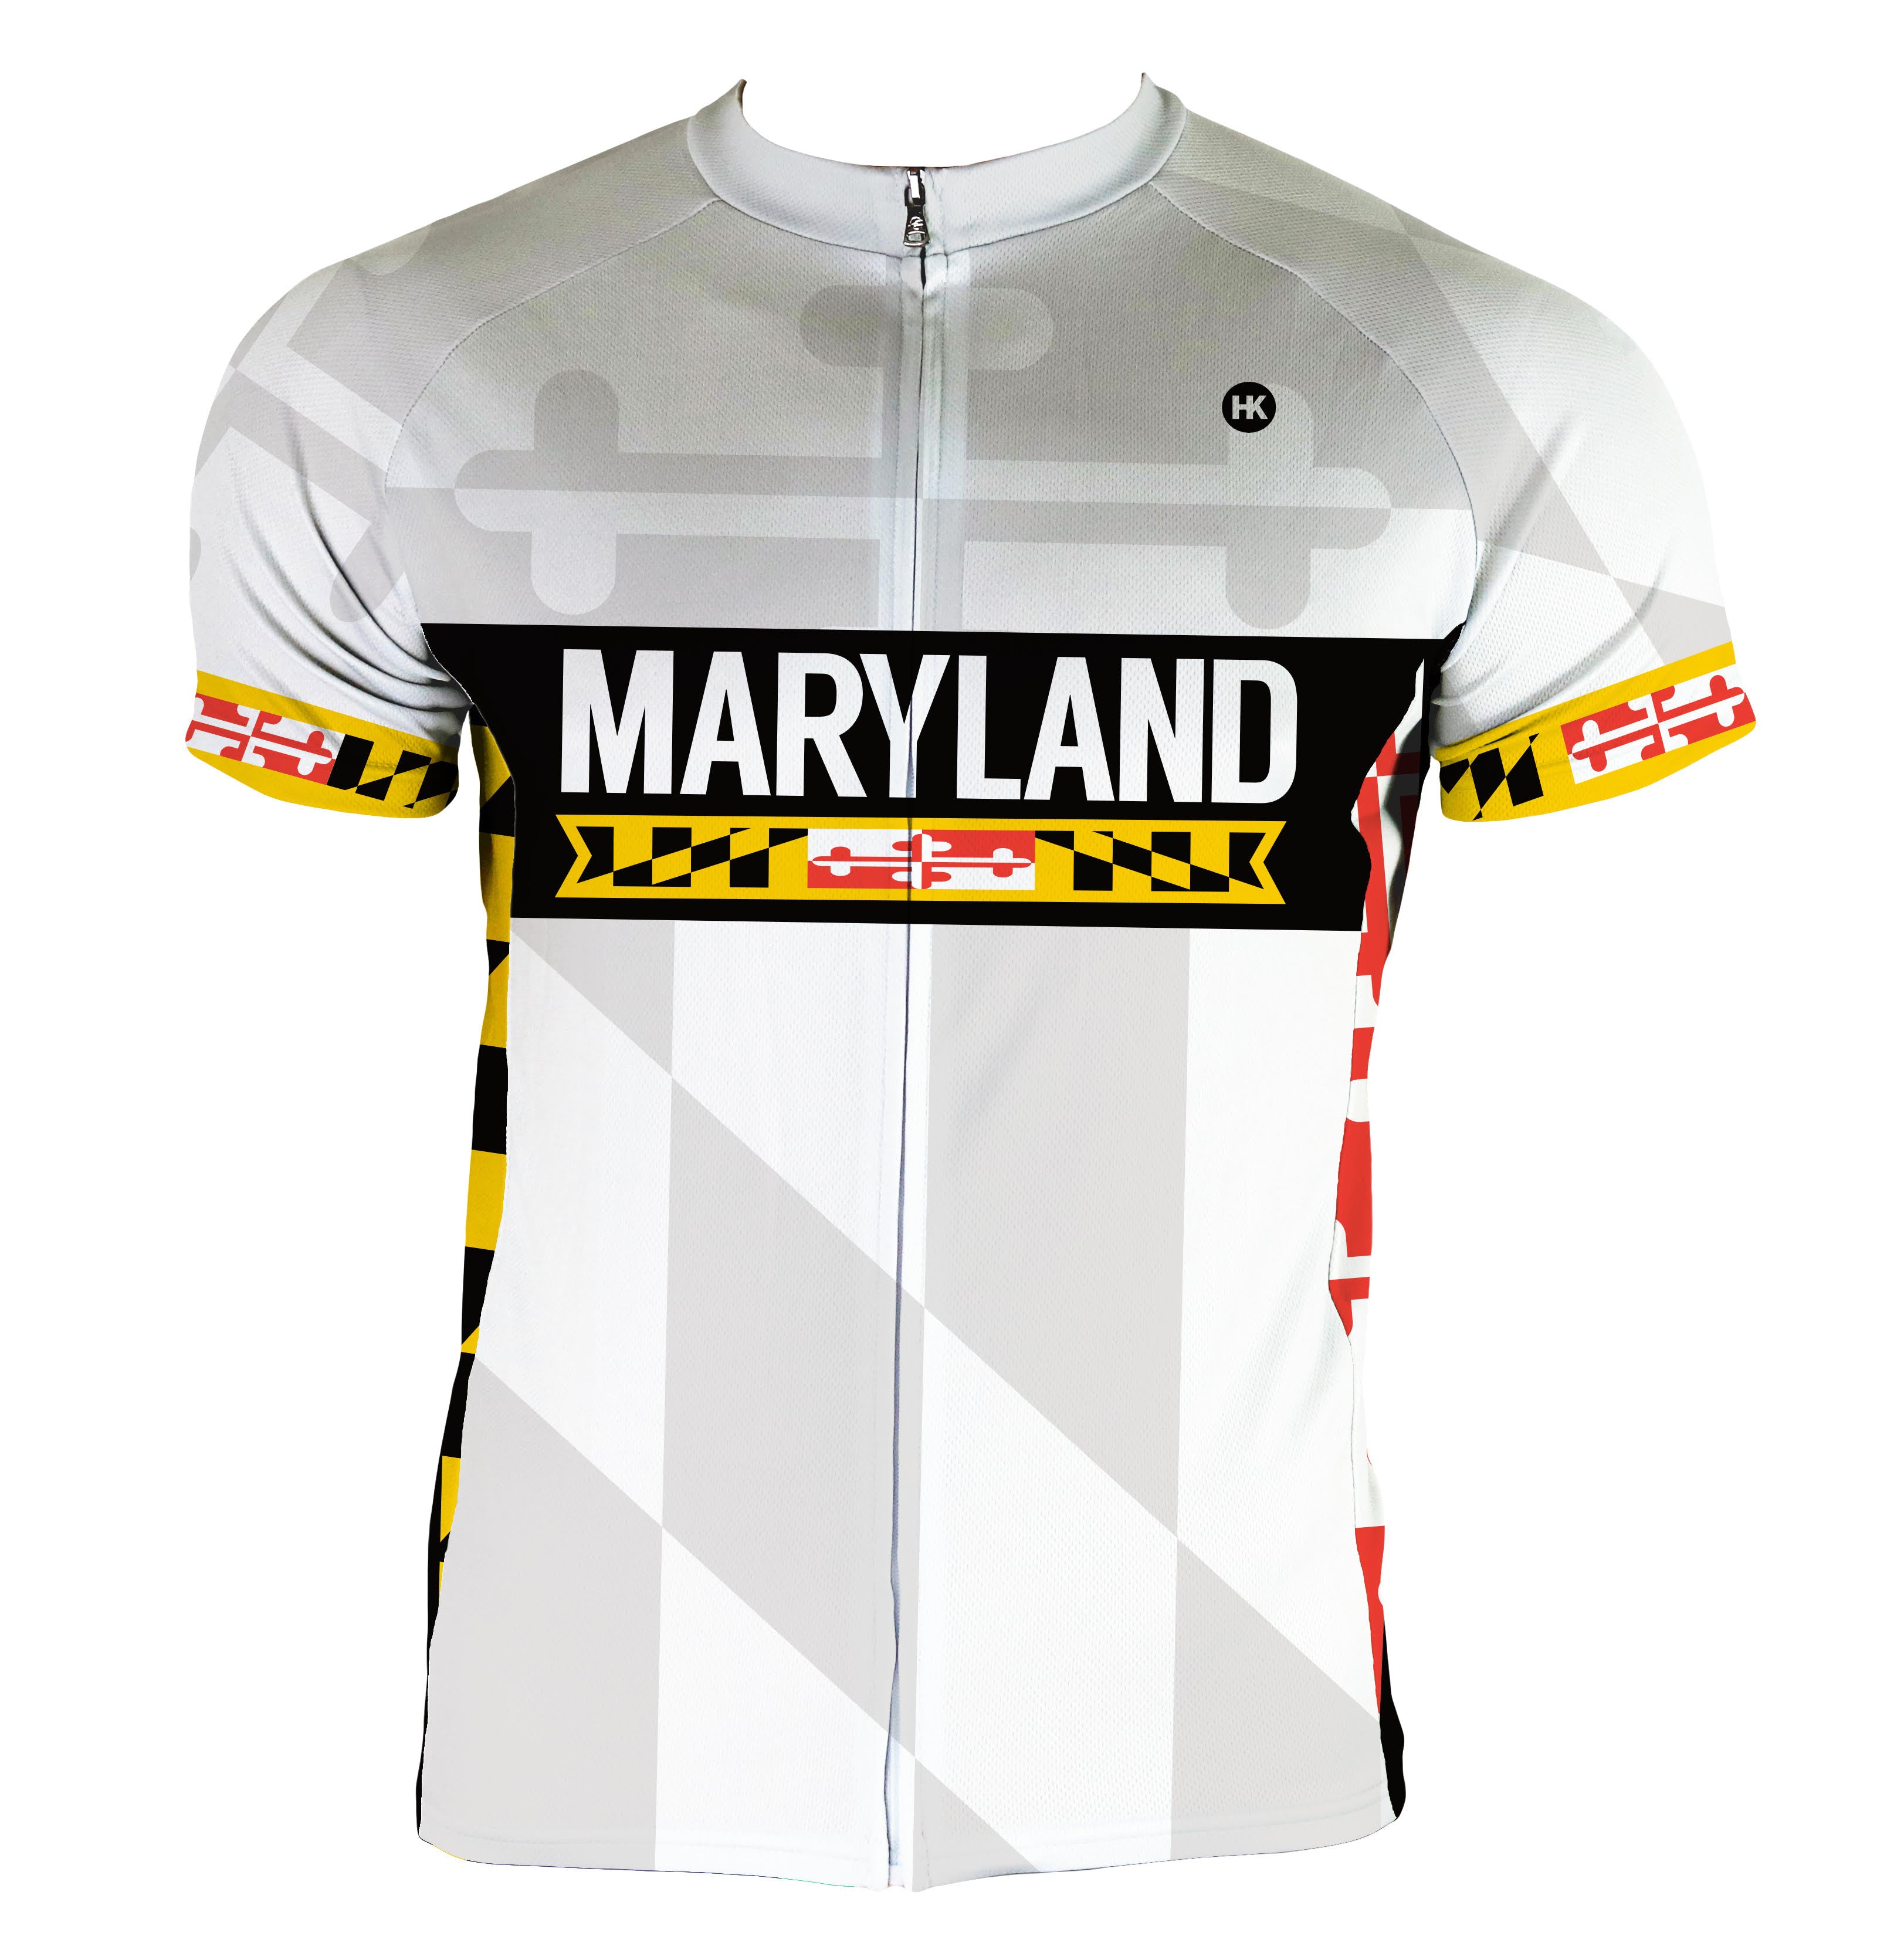 Maryland 2.0 Men's Cycling Jersey | Hill Killer Apparel X-Large / Regular / White